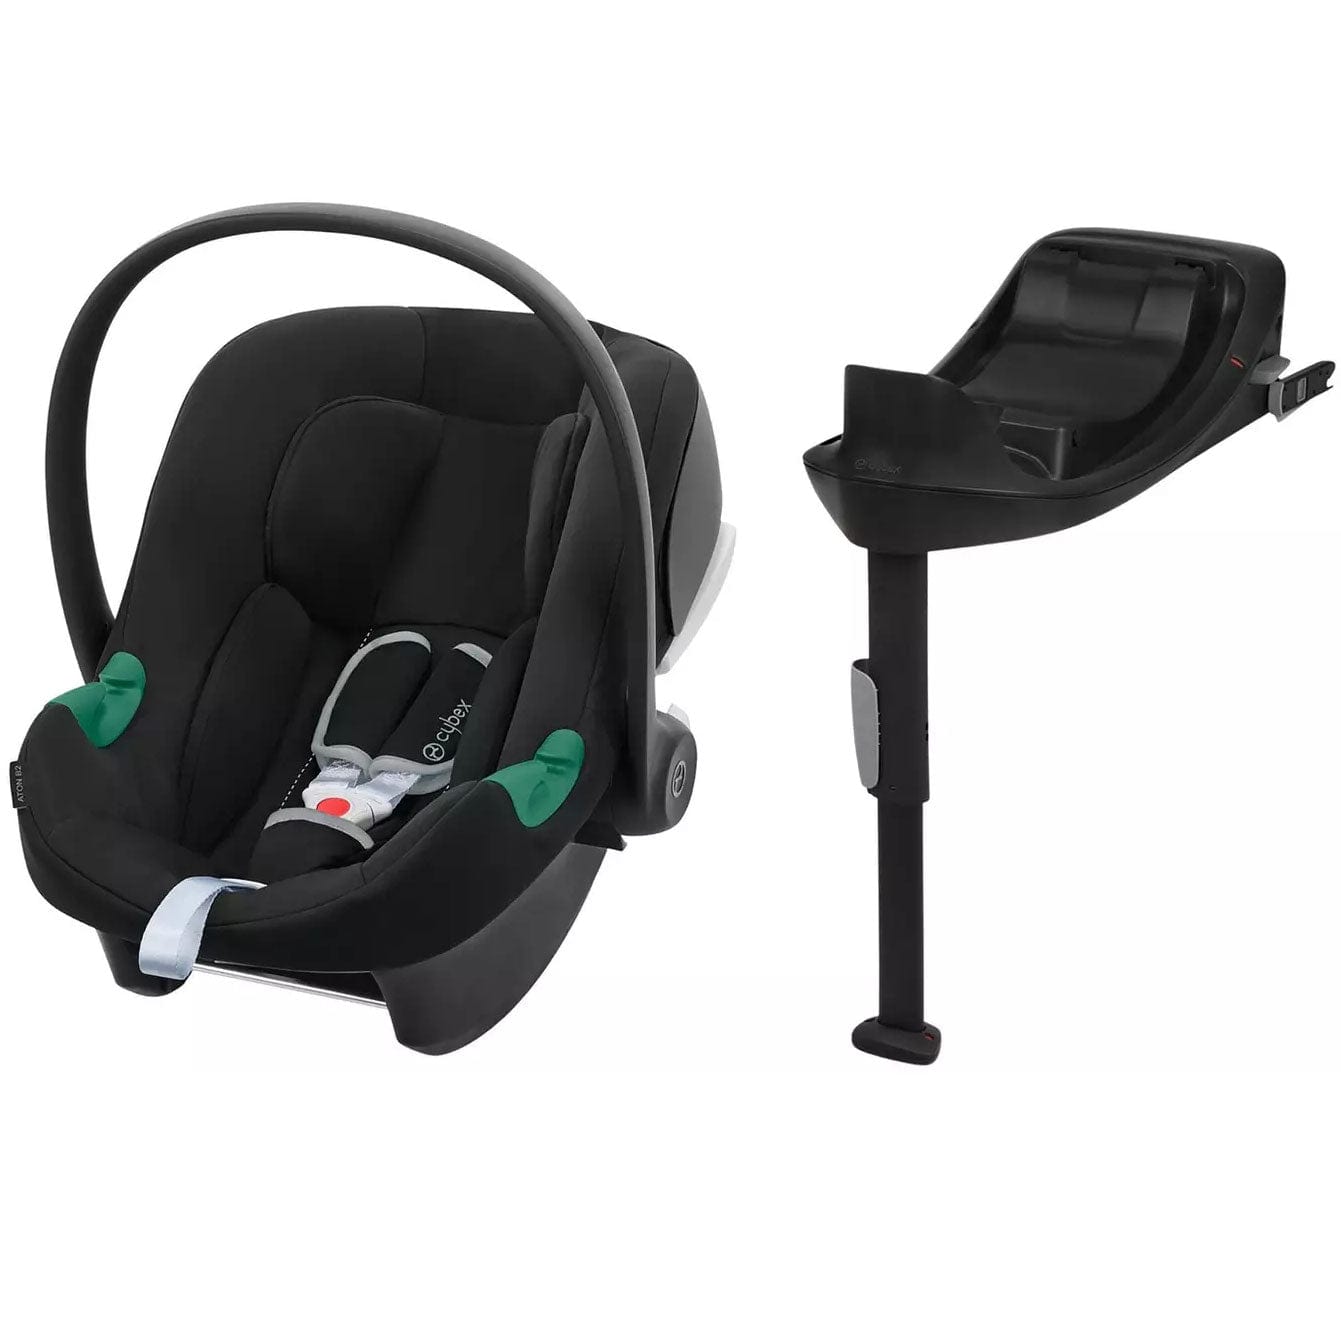 Cybex Aton B2 i-Size Car Seat in Volcano Black Baby Car Seats 521004871 4063486032640